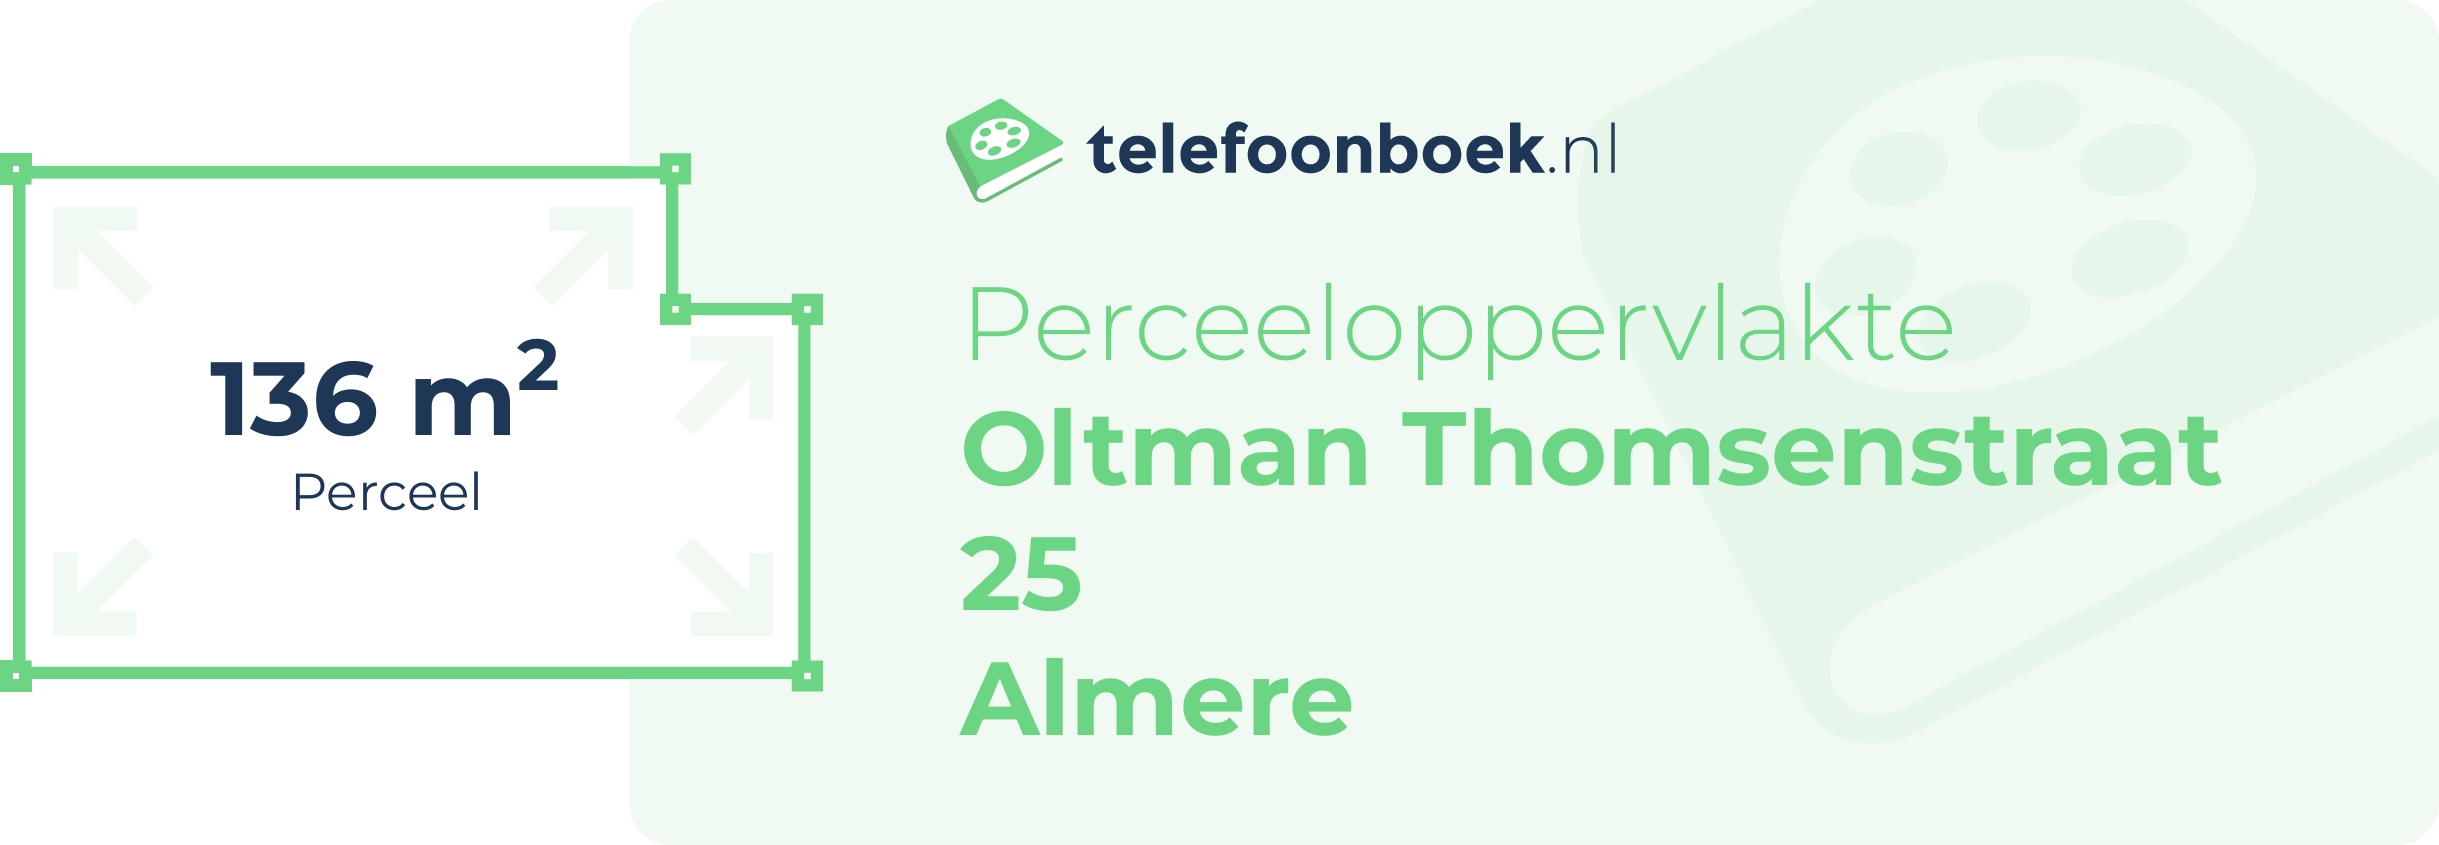 Perceeloppervlakte Oltman Thomsenstraat 25 Almere